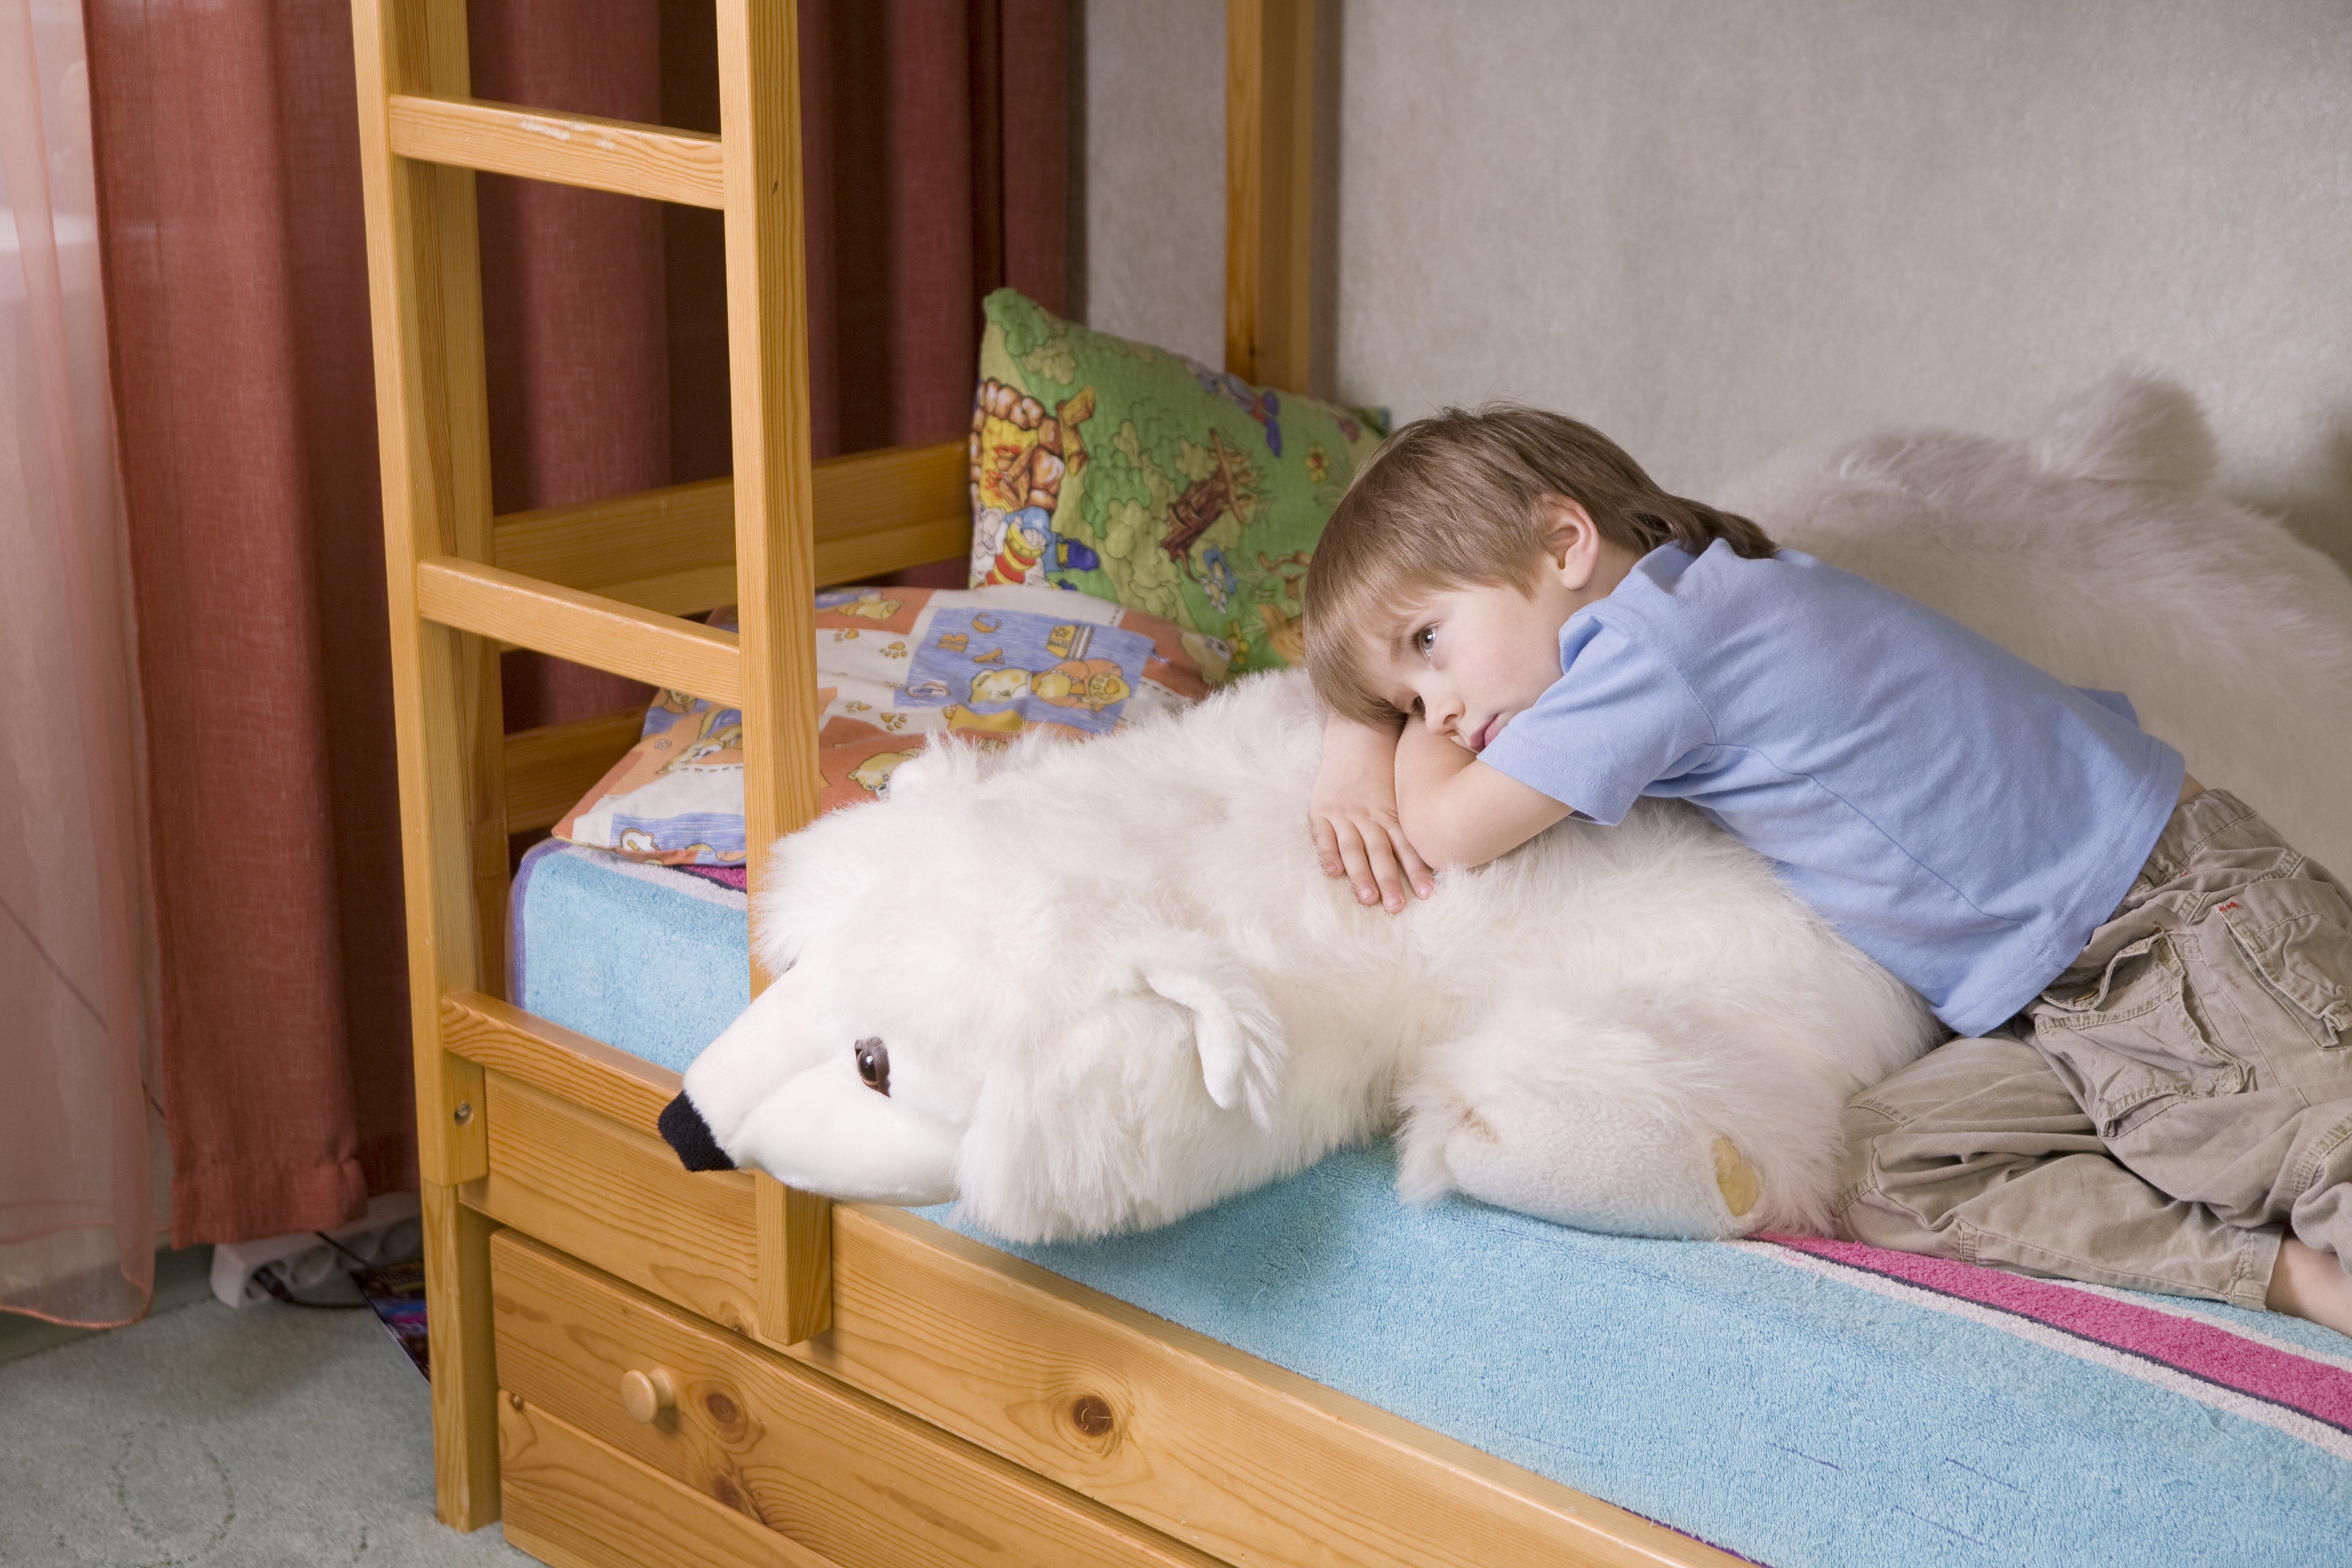 Boy at bedtime snuggling a plush polar bear